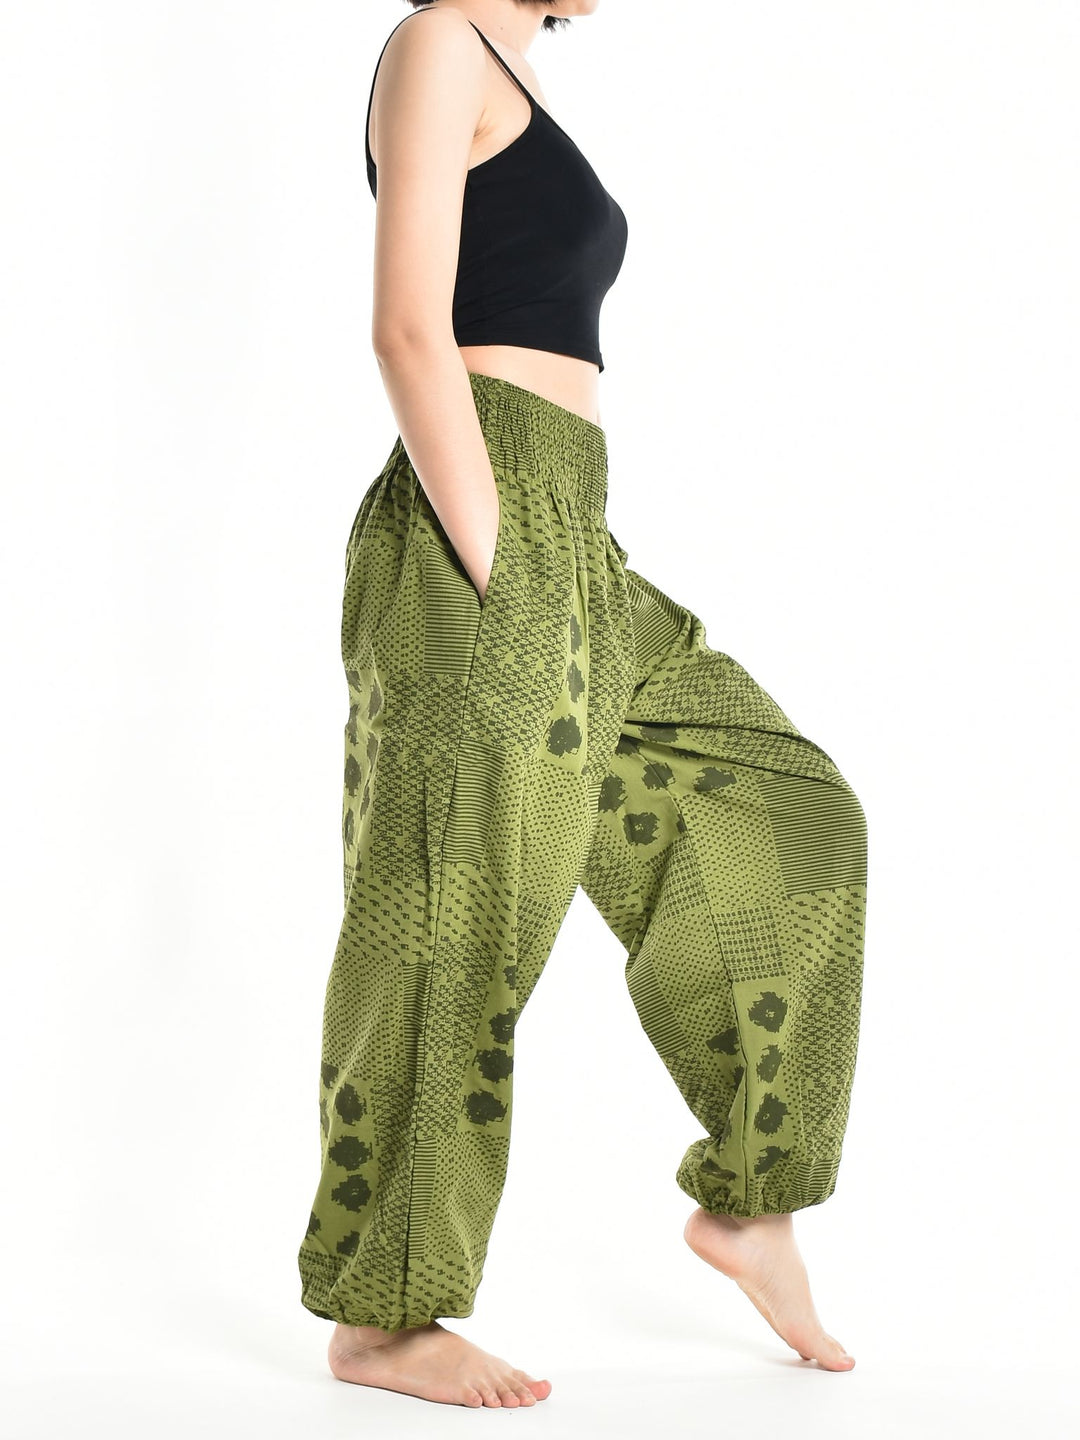 Bohotusk Womens Autumn Green Lunar Cotton Harem Pants S/M to 3XL